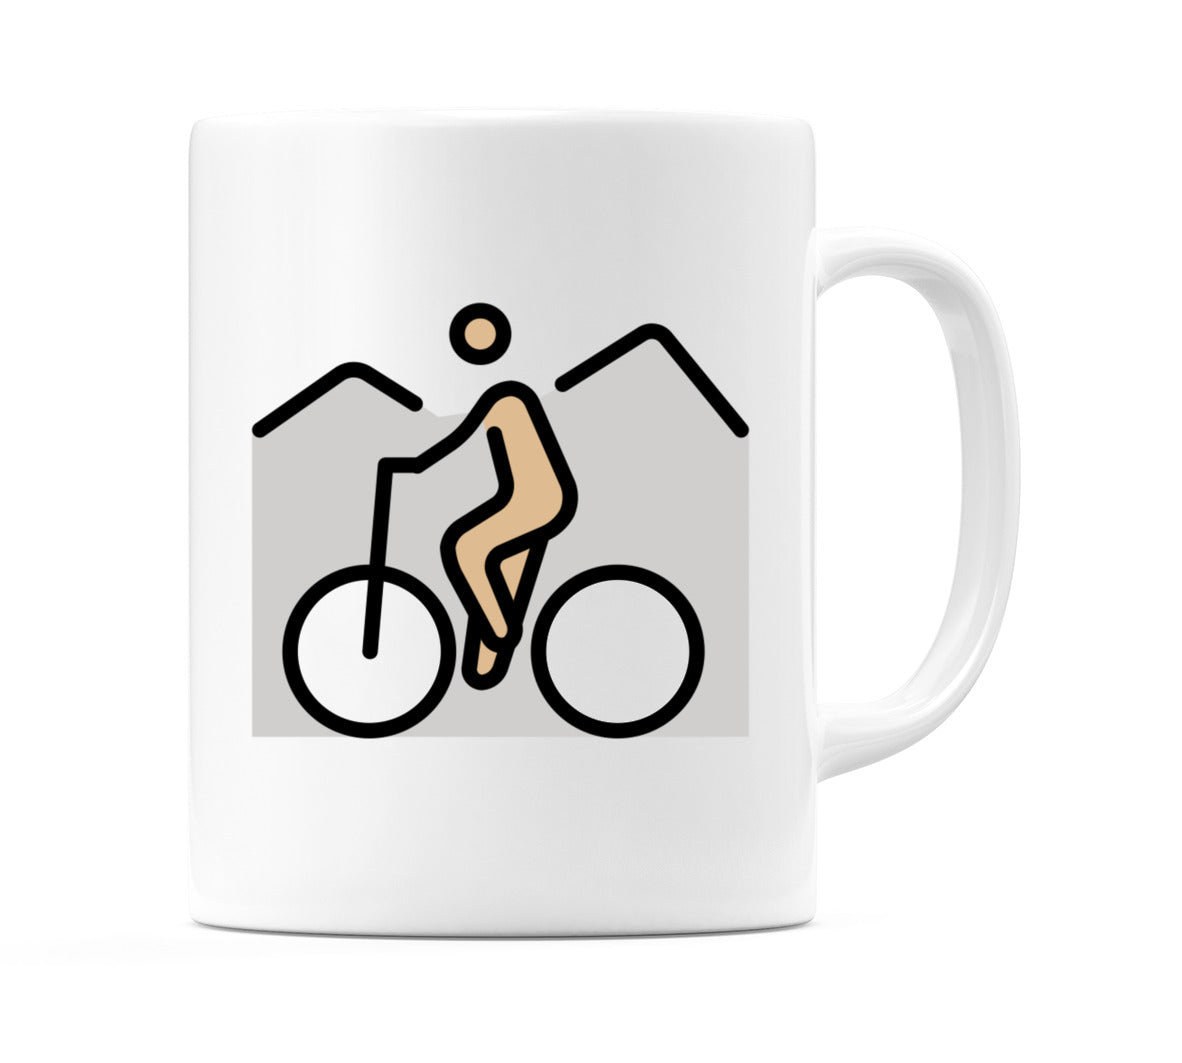 Person Mountain Biking: Medium-Light Skin Tone Emoji Mug